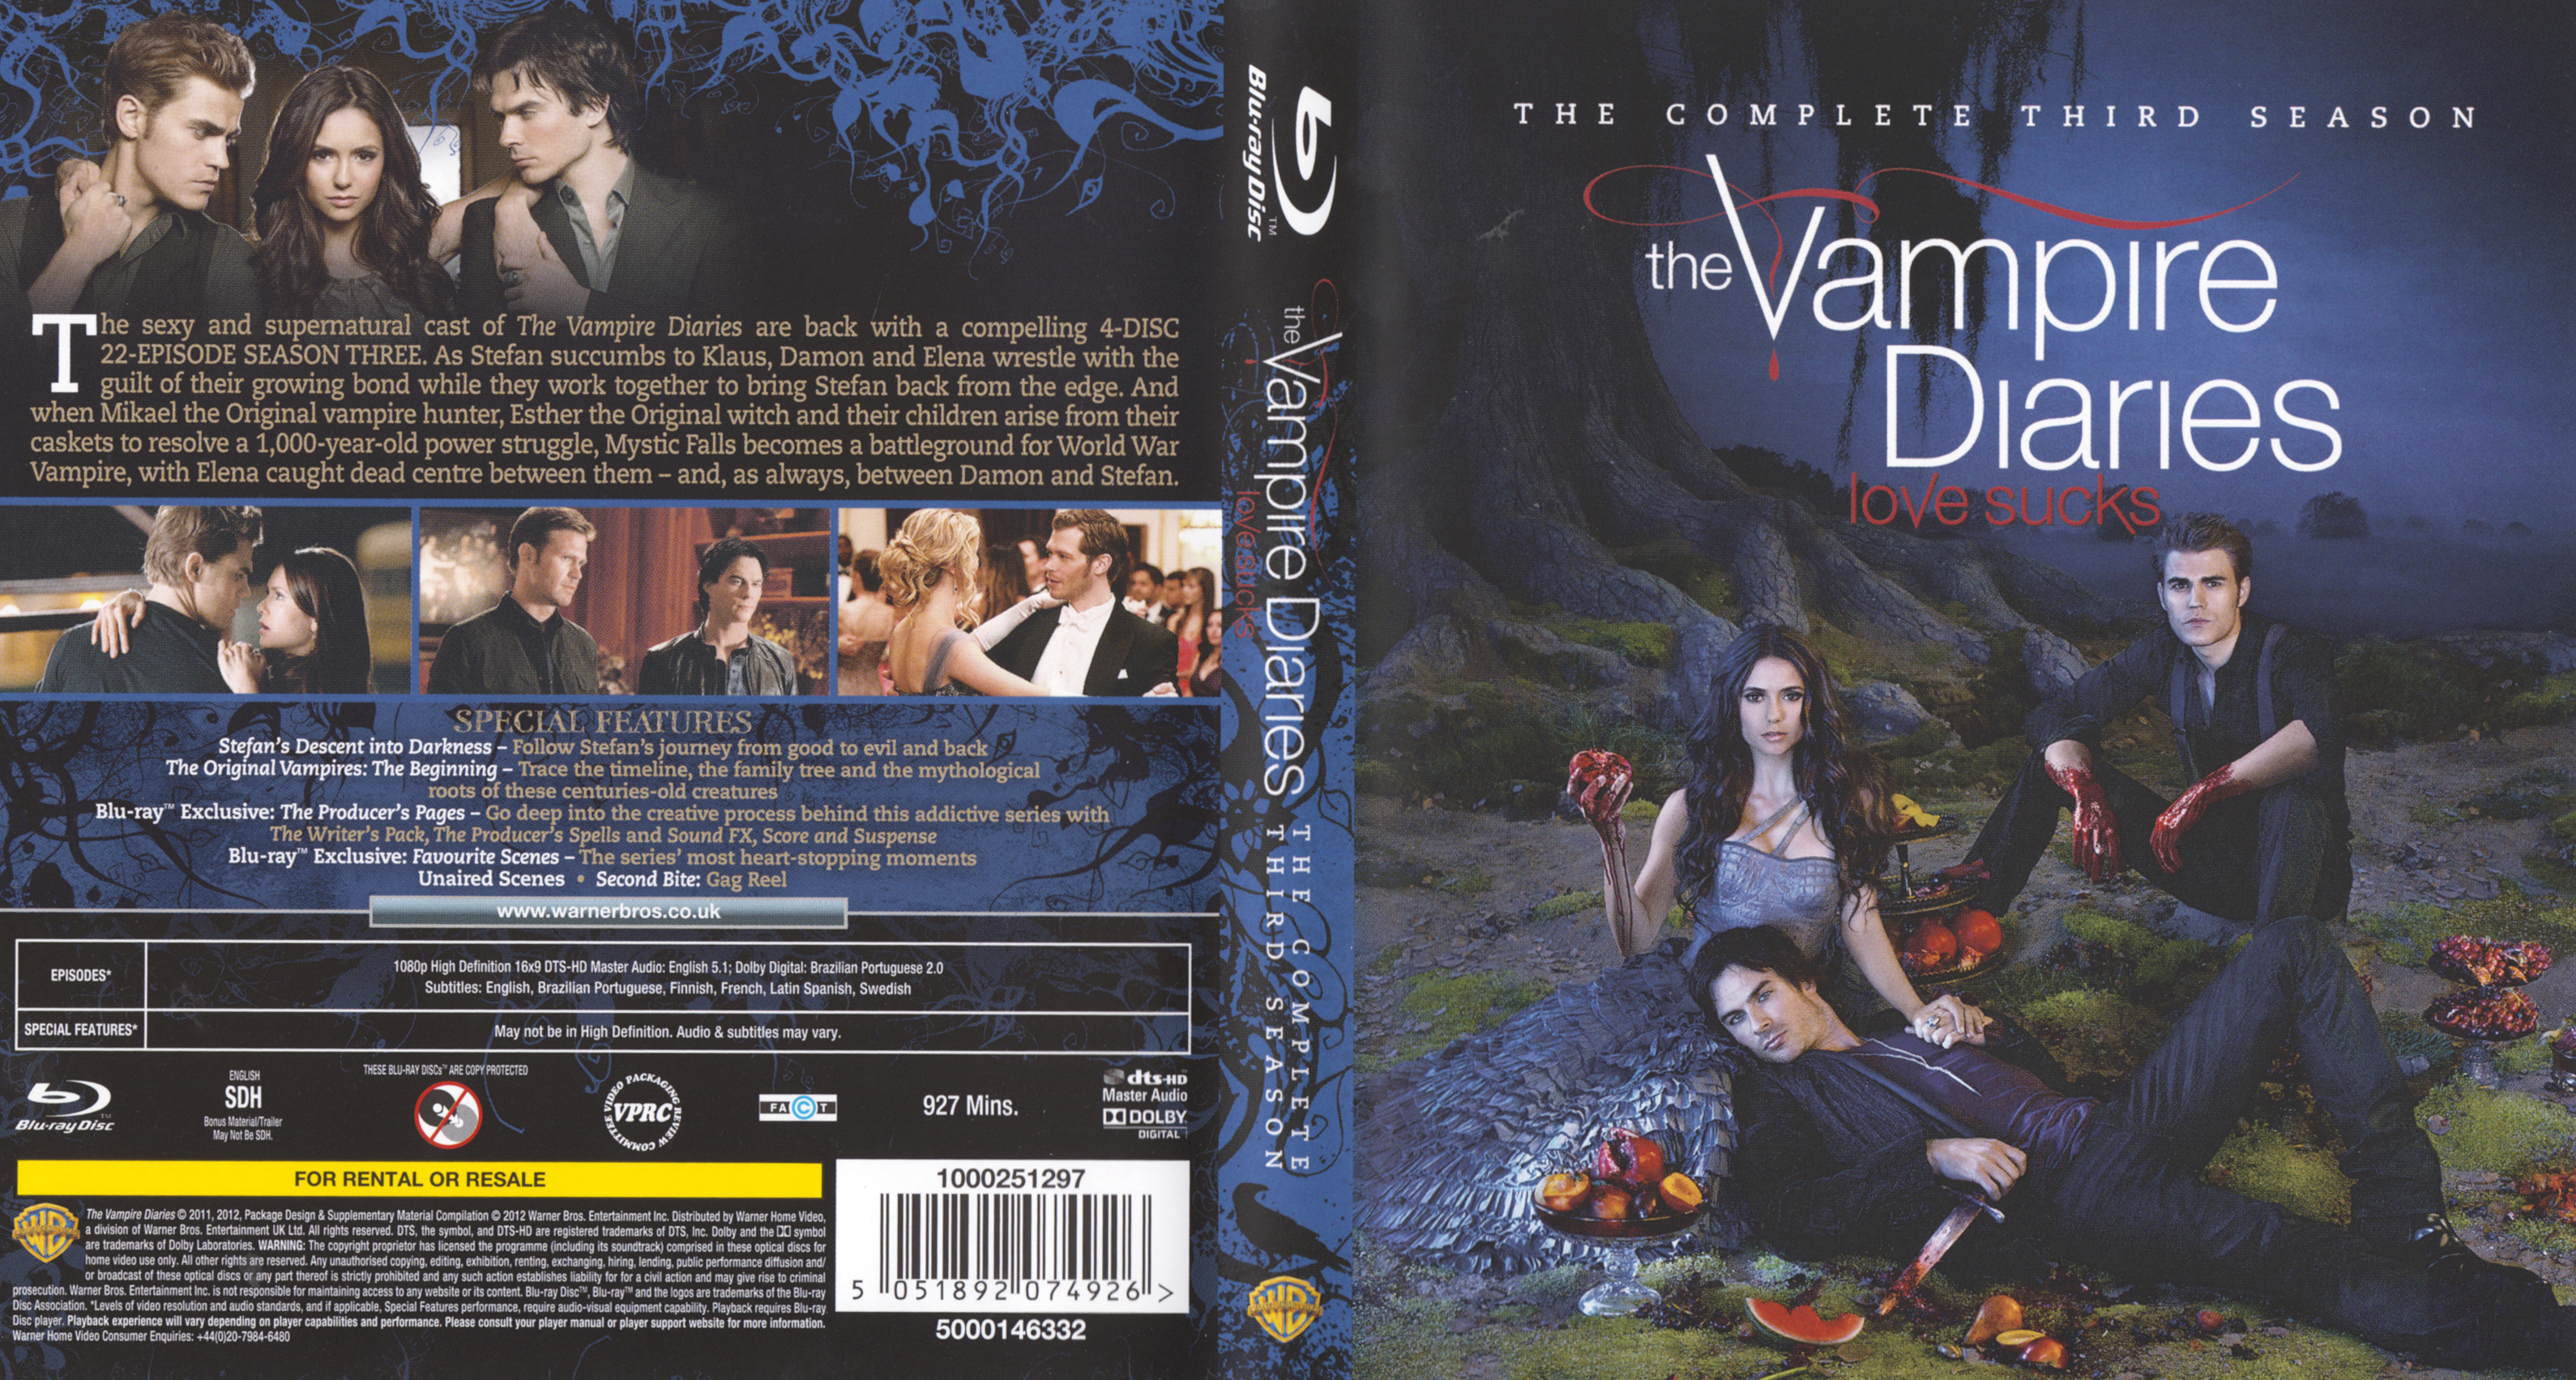 Jaquette DVD The vampire diaries Saison 3 Zone 1